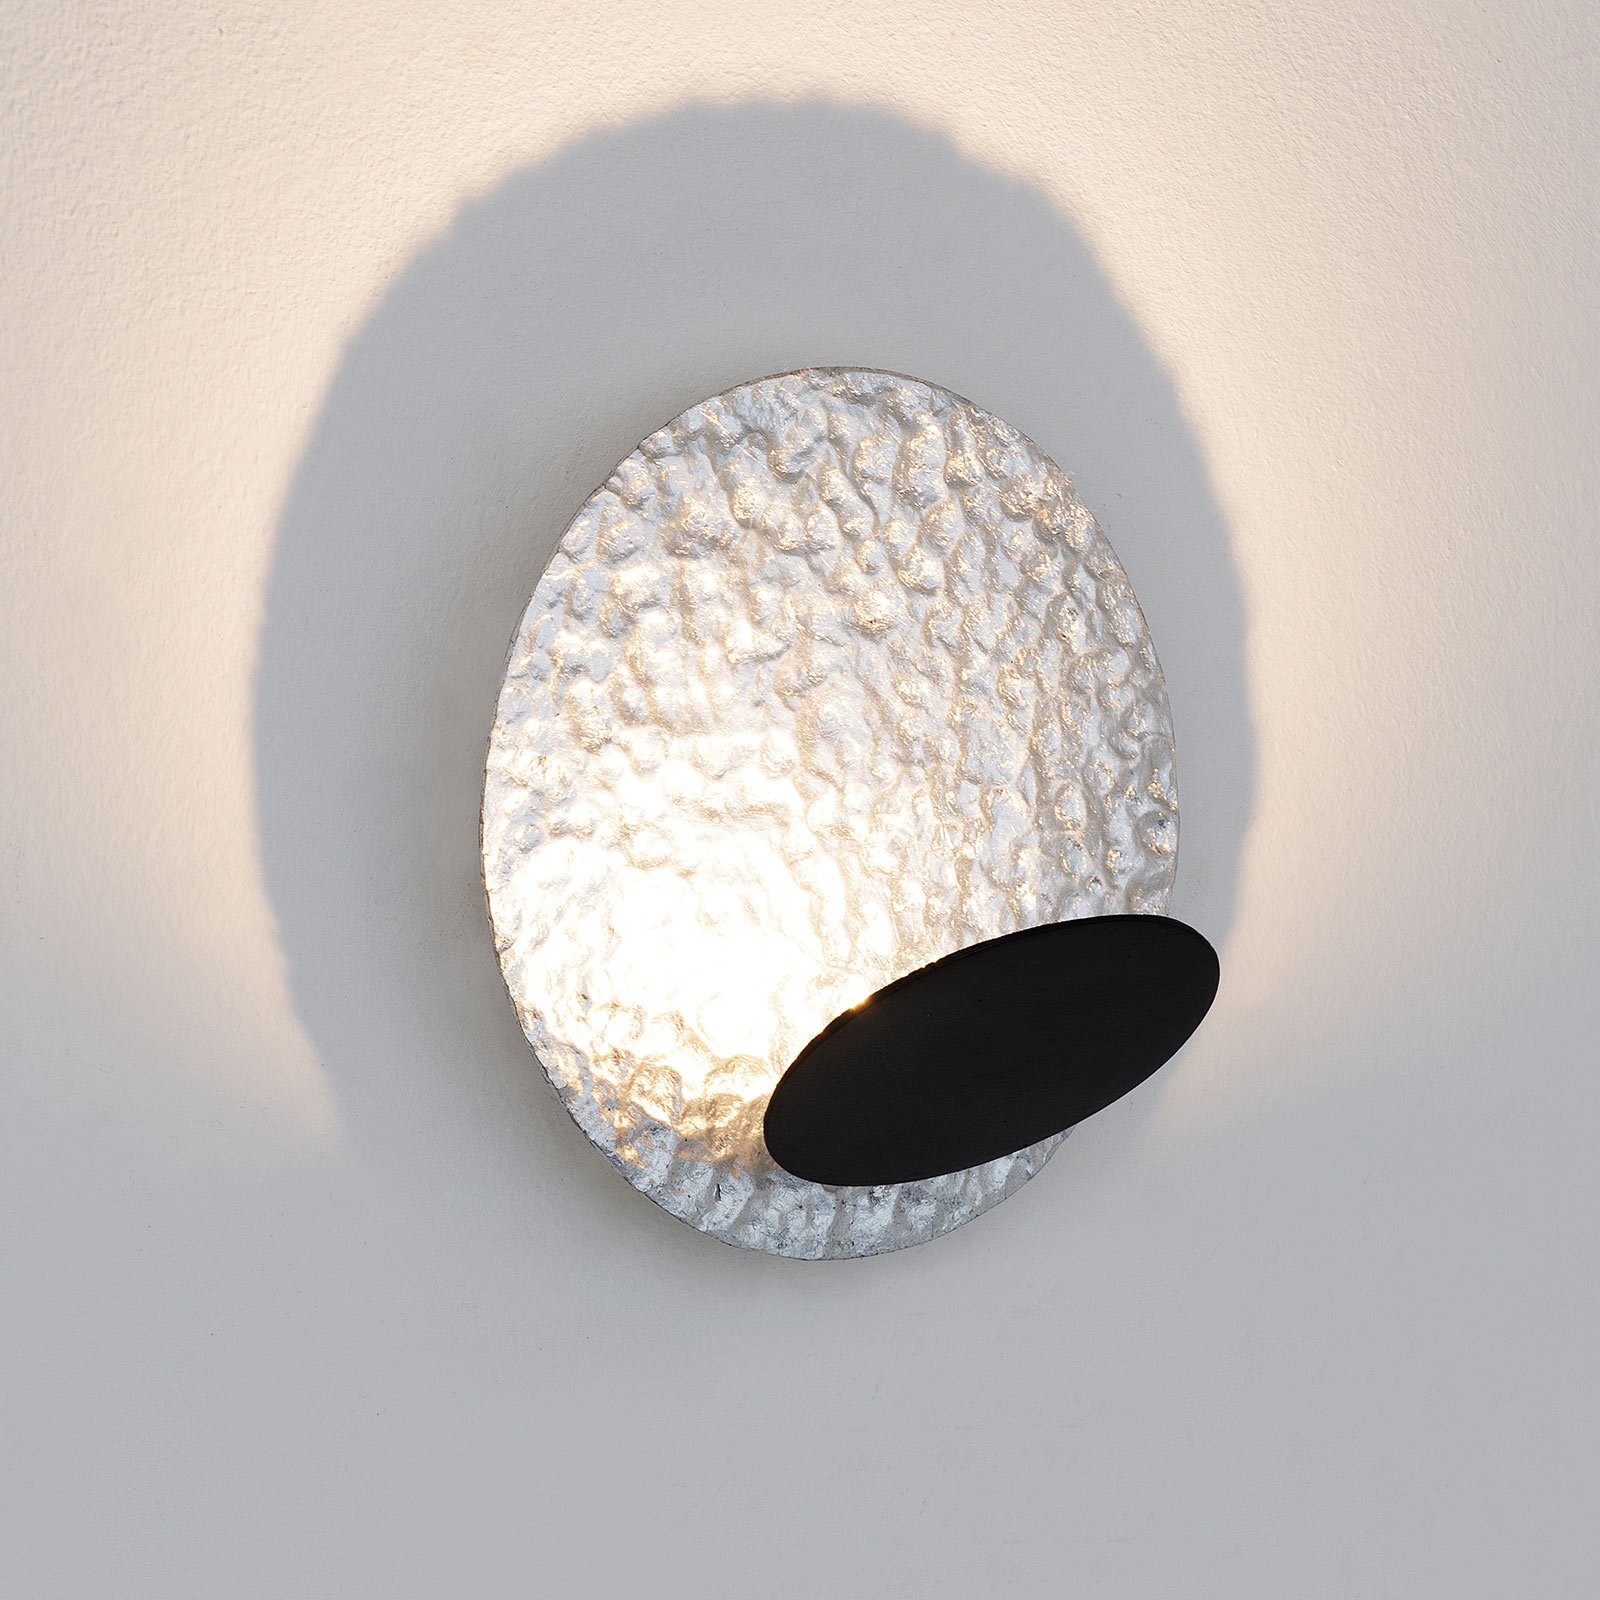 LED sienas lampa Infinity, sudraba krāsā, Ø 20 cm